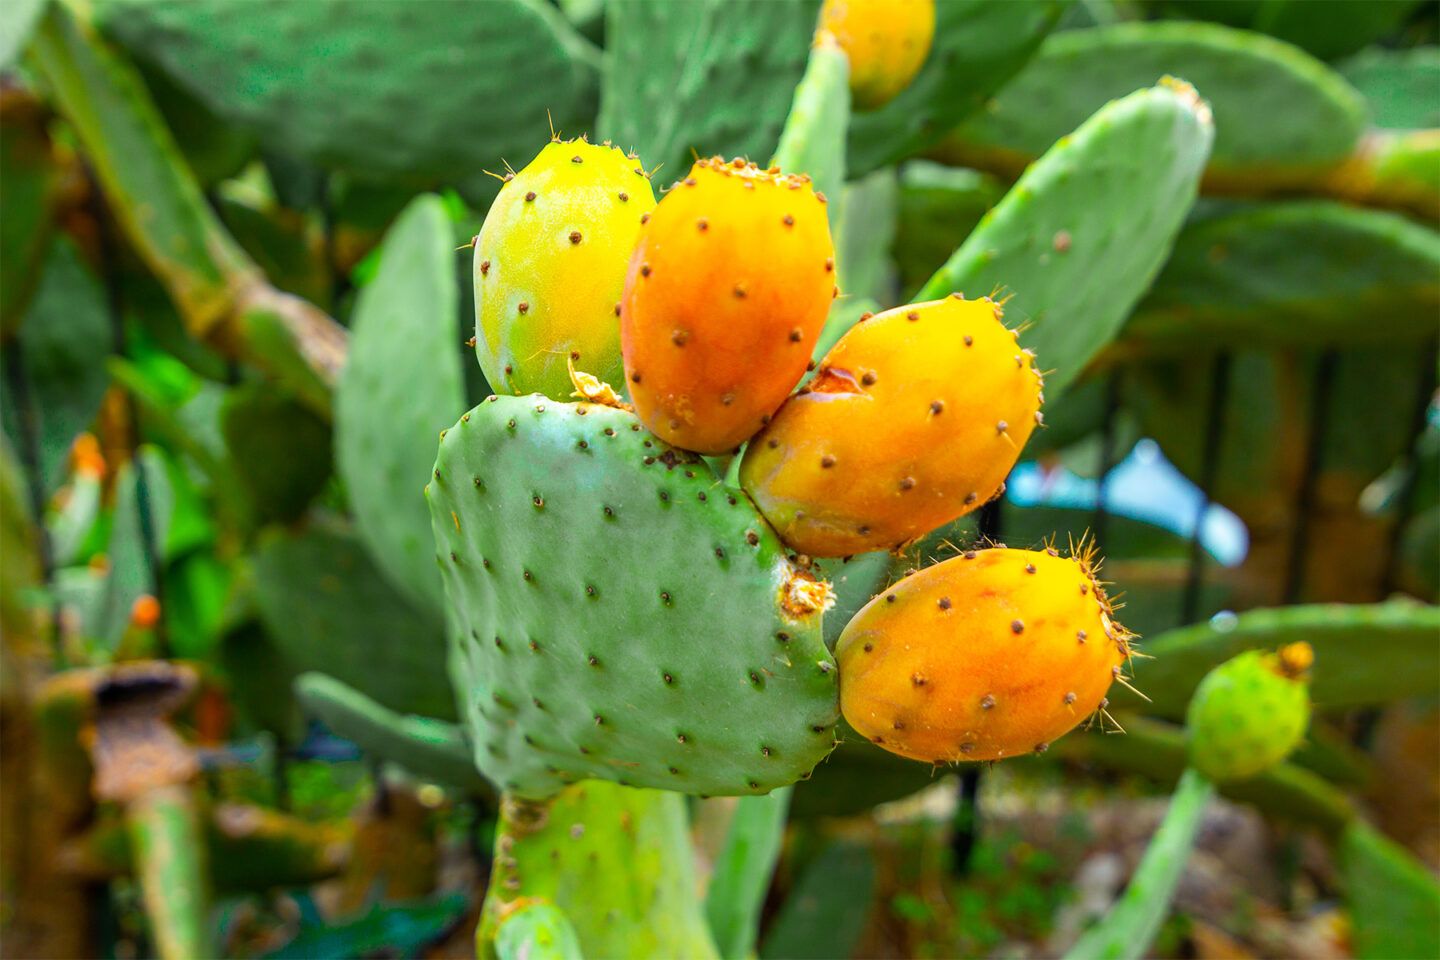 nopales cactus with orange prickly pears